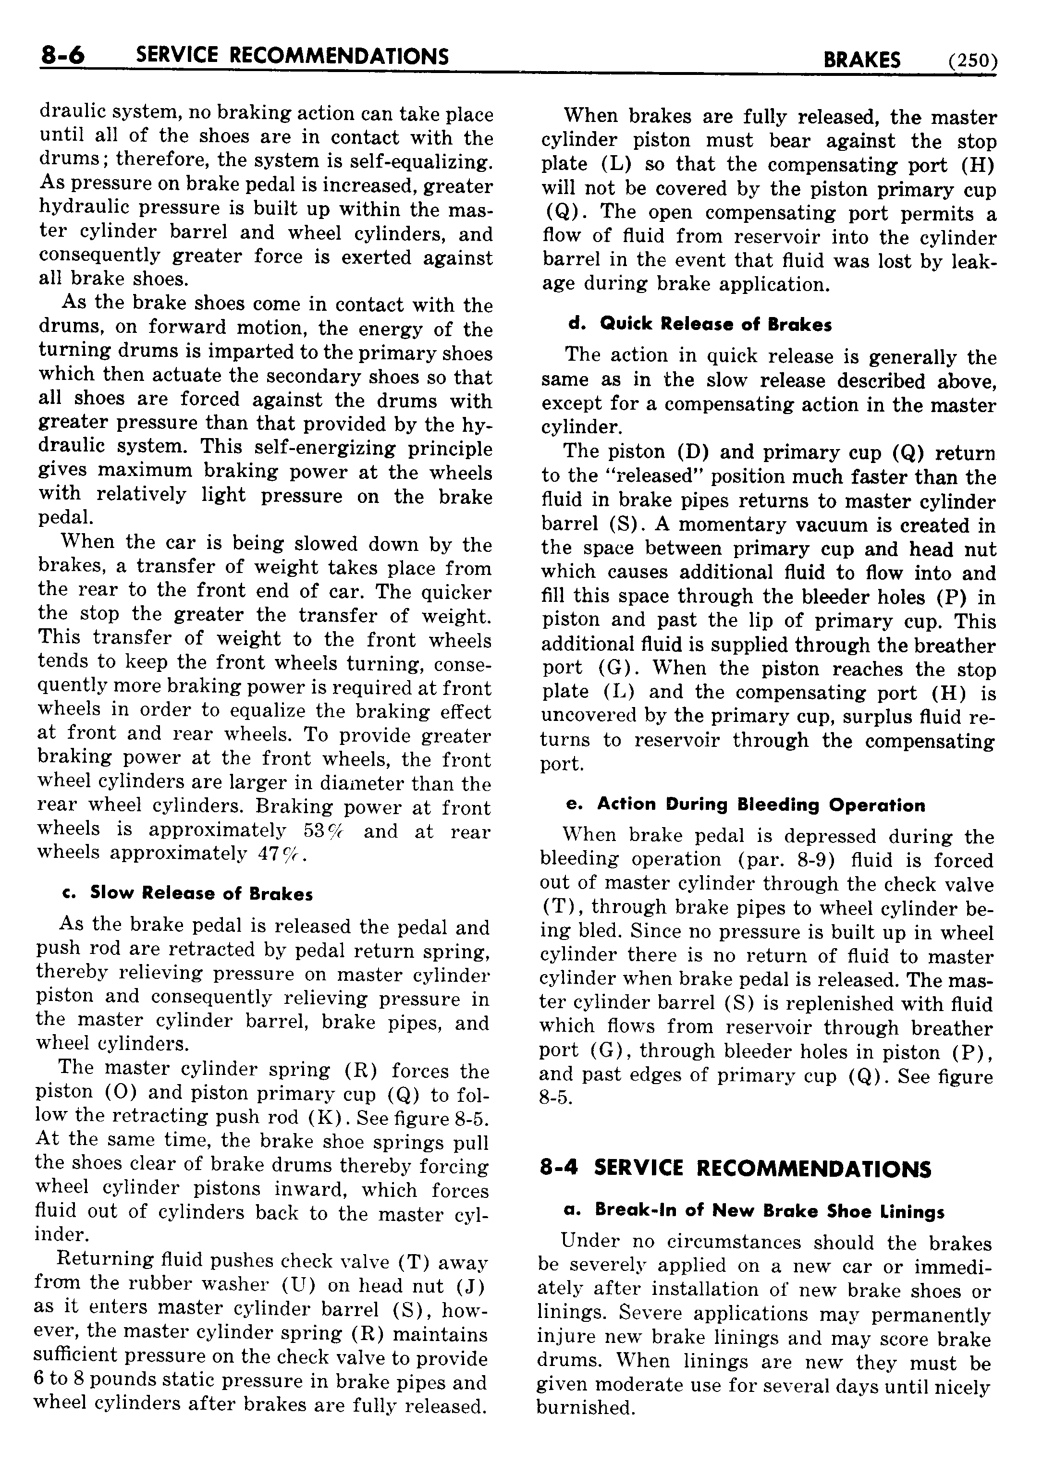 n_09 1948 Buick Shop Manual - Brakes-006-006.jpg